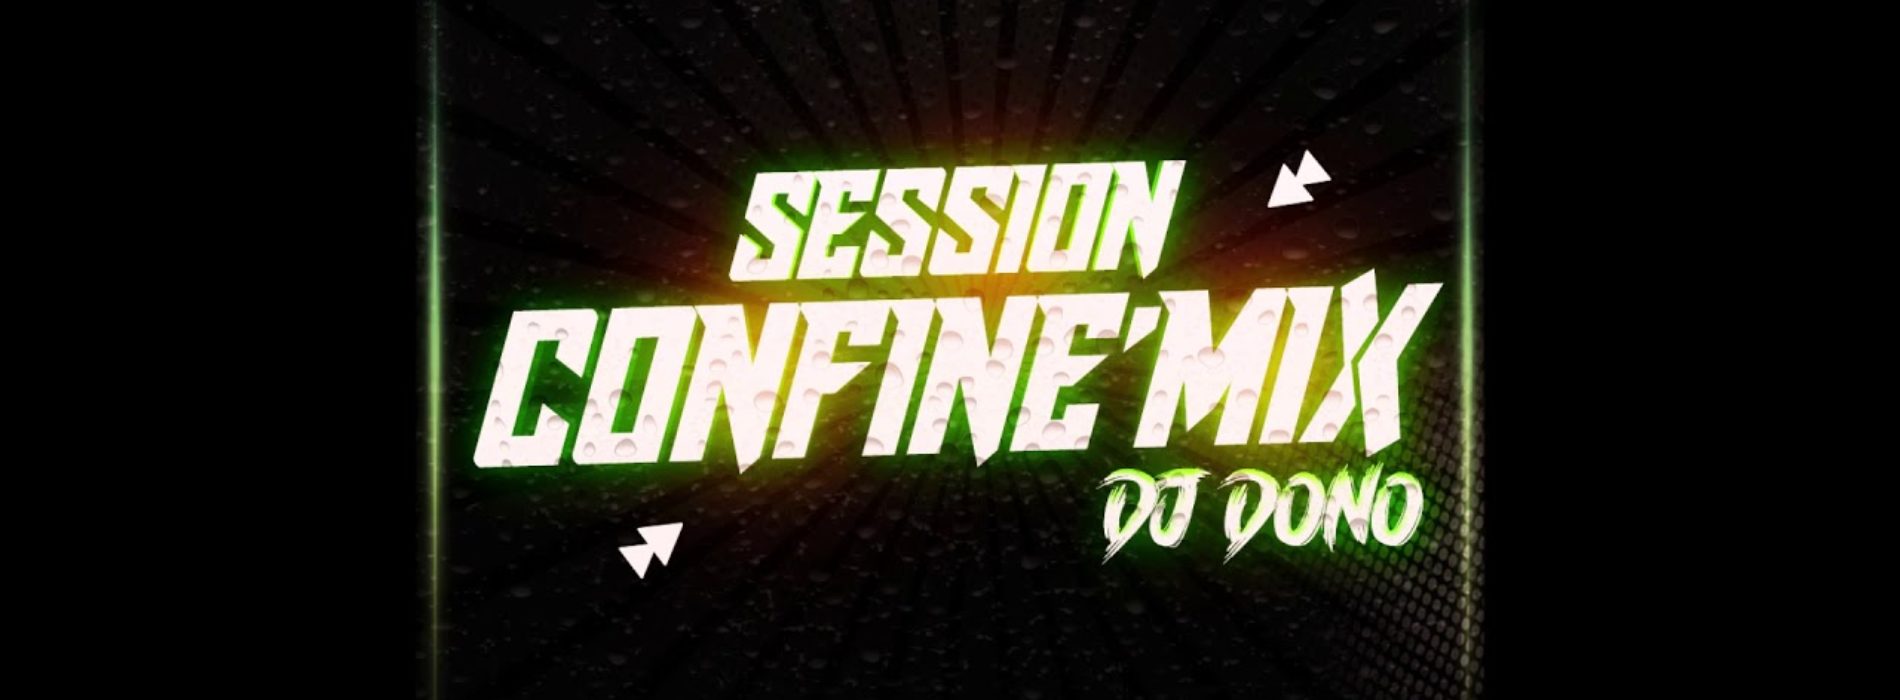 DJ LUVAN – RestNoutKaz (Confinement 2020) [ VideoMix By Dj Tony ] // DJ BOB FT NICO – PAS PAREIL // DJ DONO – RATA (COUPE DECALE) 2020 //DJ TONY – CORONAMIX [INTRO] 2020 – // DJ DONO – SESSION CONFINE’MIX (2020) – Mars 2020